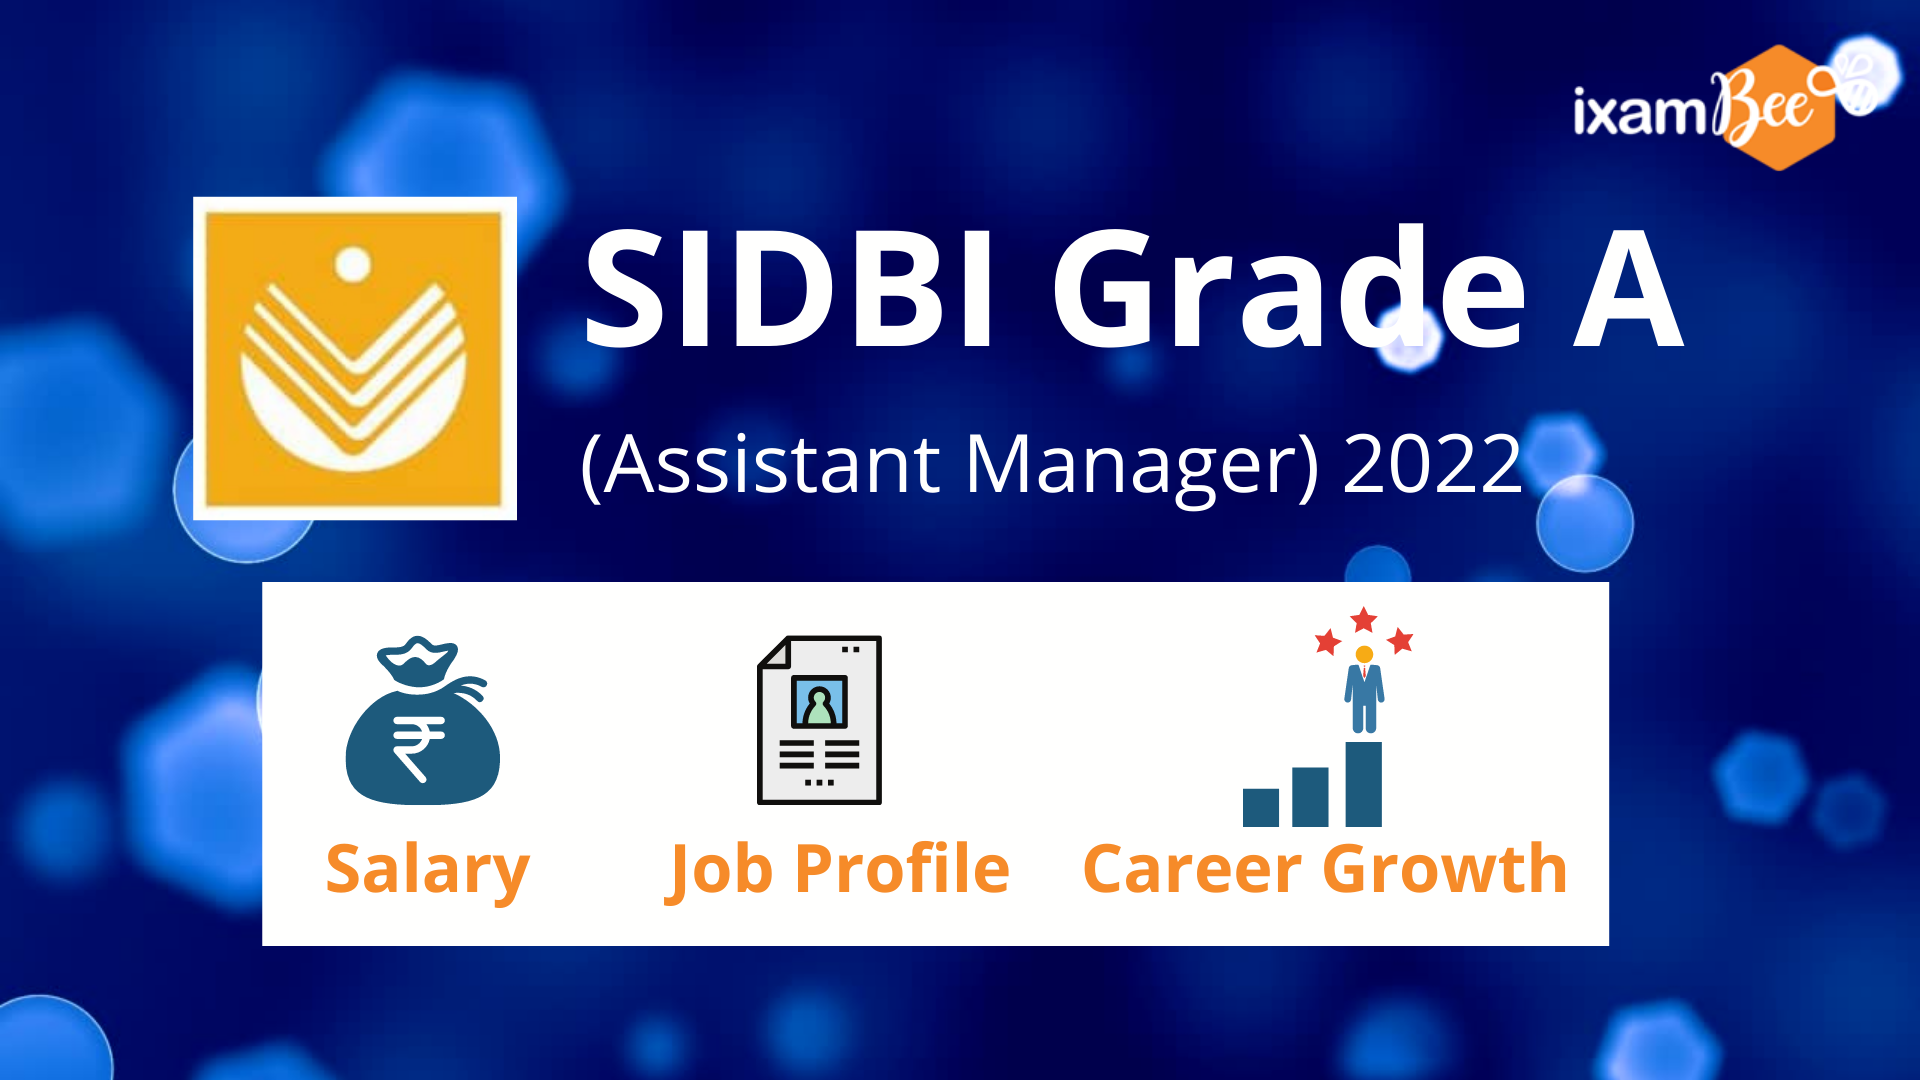 SIDBI Grade A Assistant Manager job profile